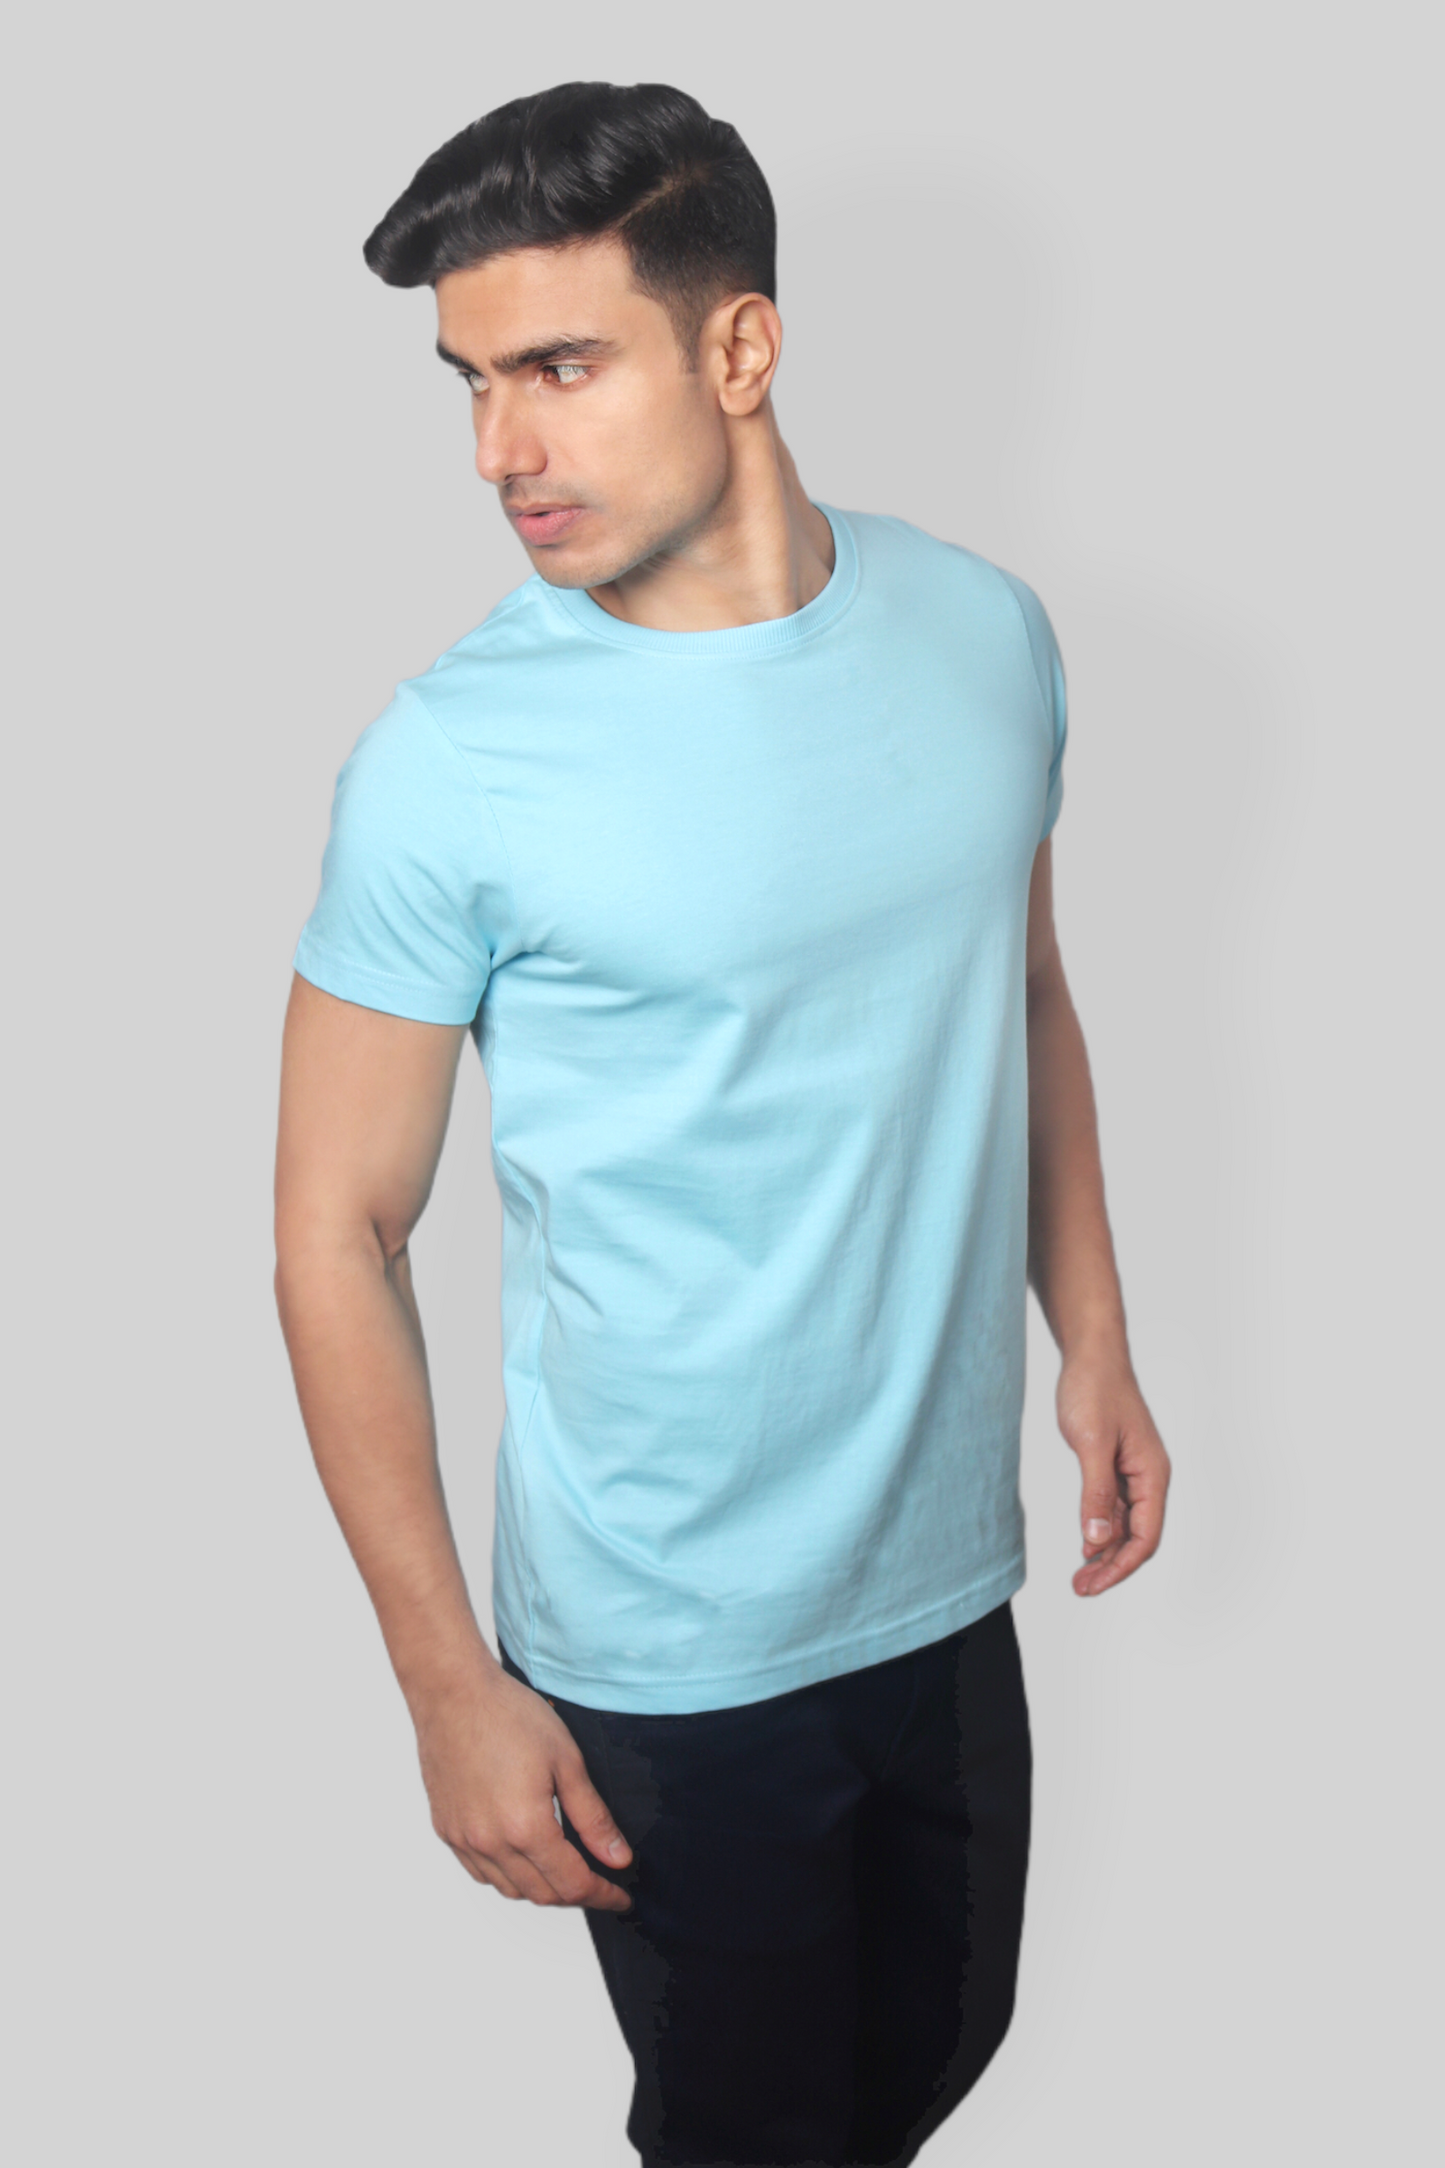 Solid Light blue plain Round Neck Cotton Tshirt for men